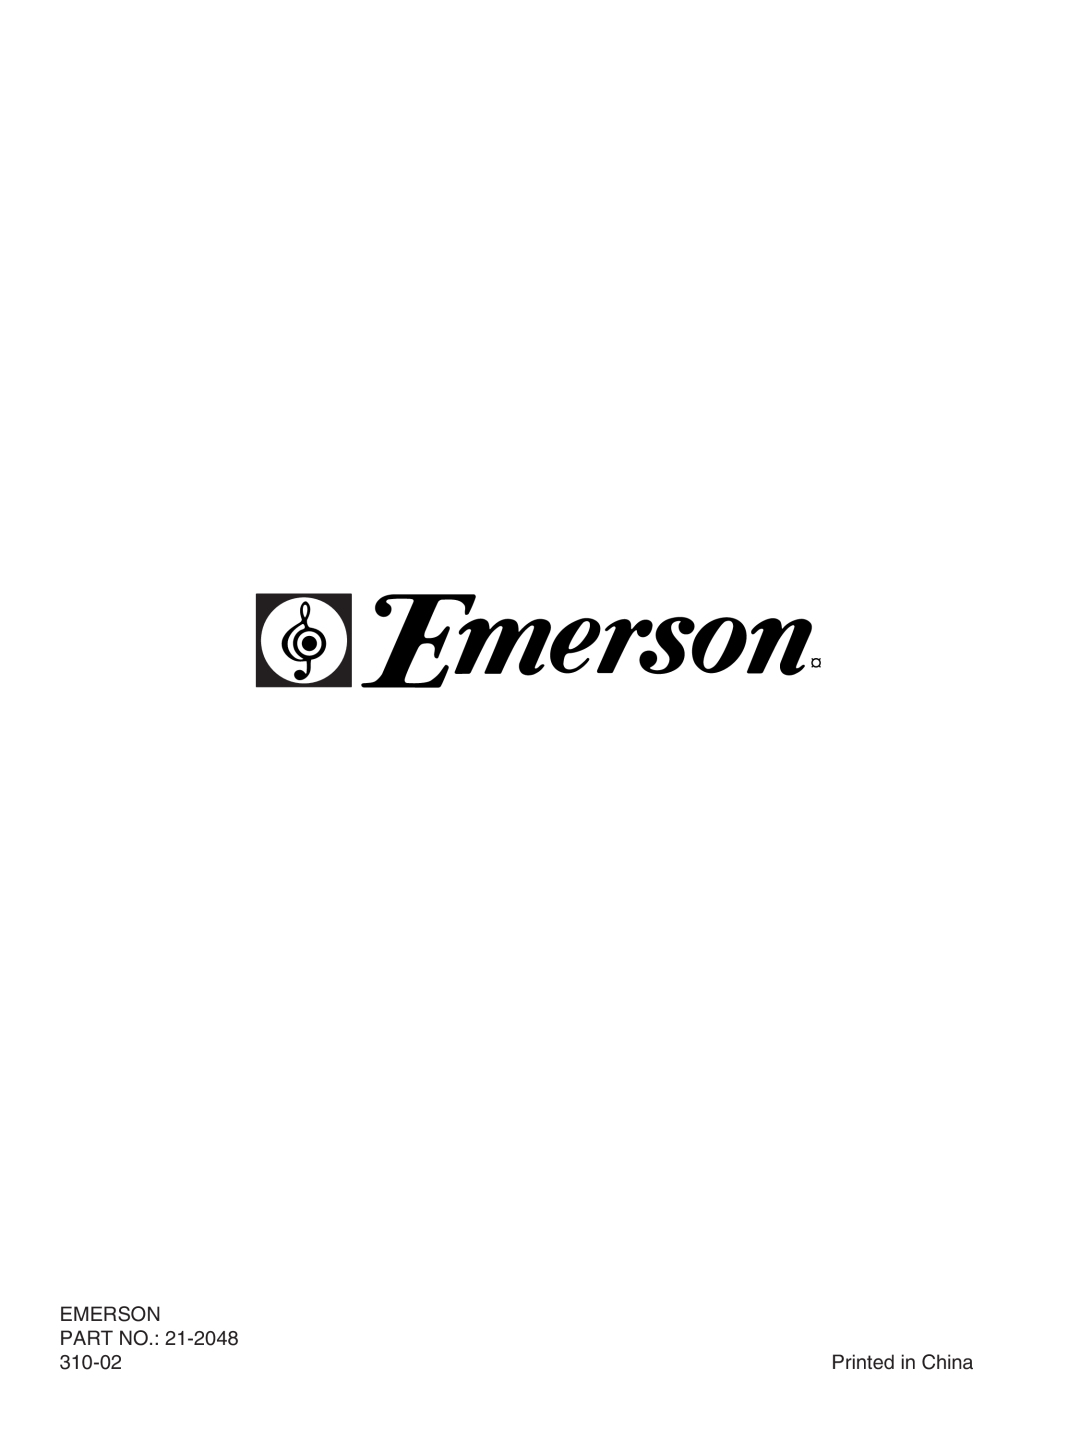 Emerson SB231, SB230 owner manual Emerson, 310-02 